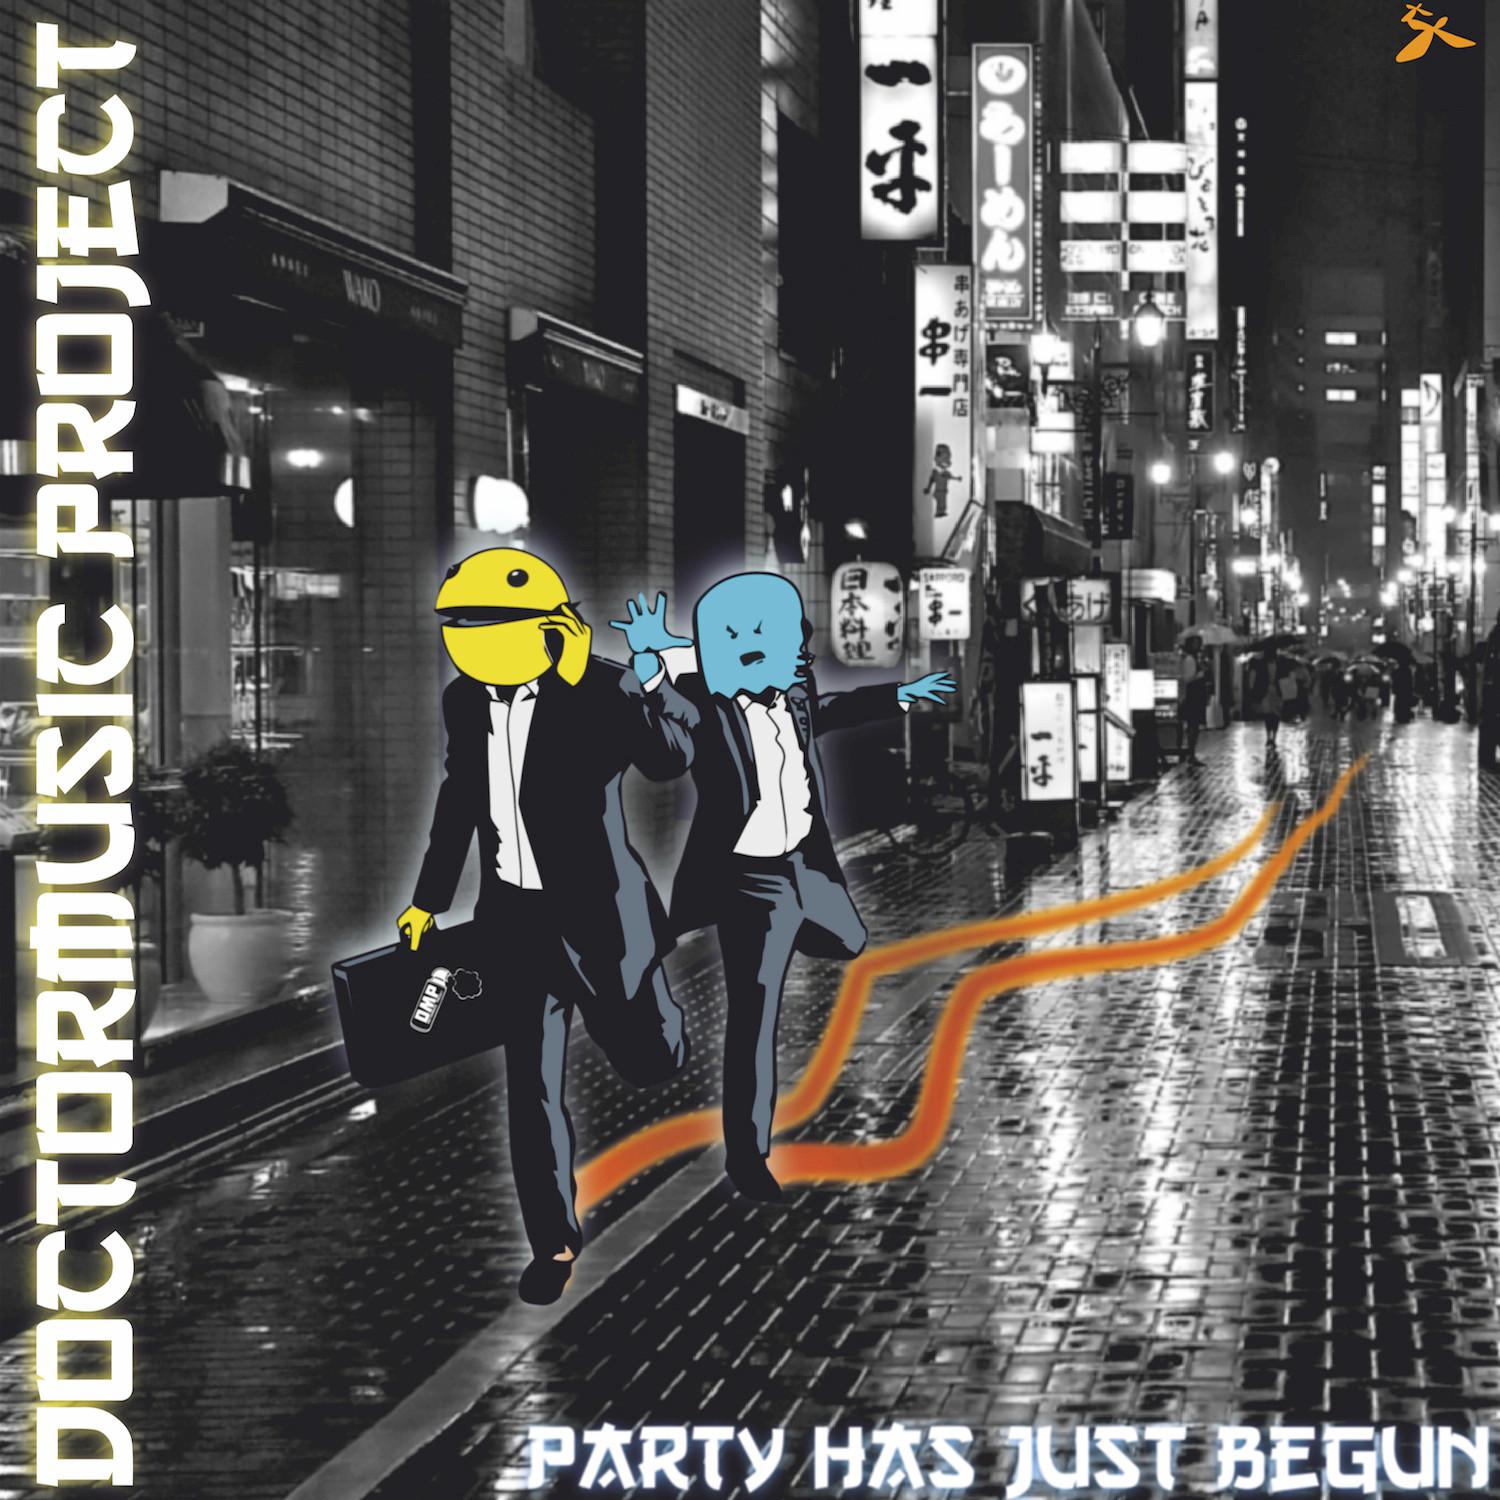 Party Time feat. Dj Steevo